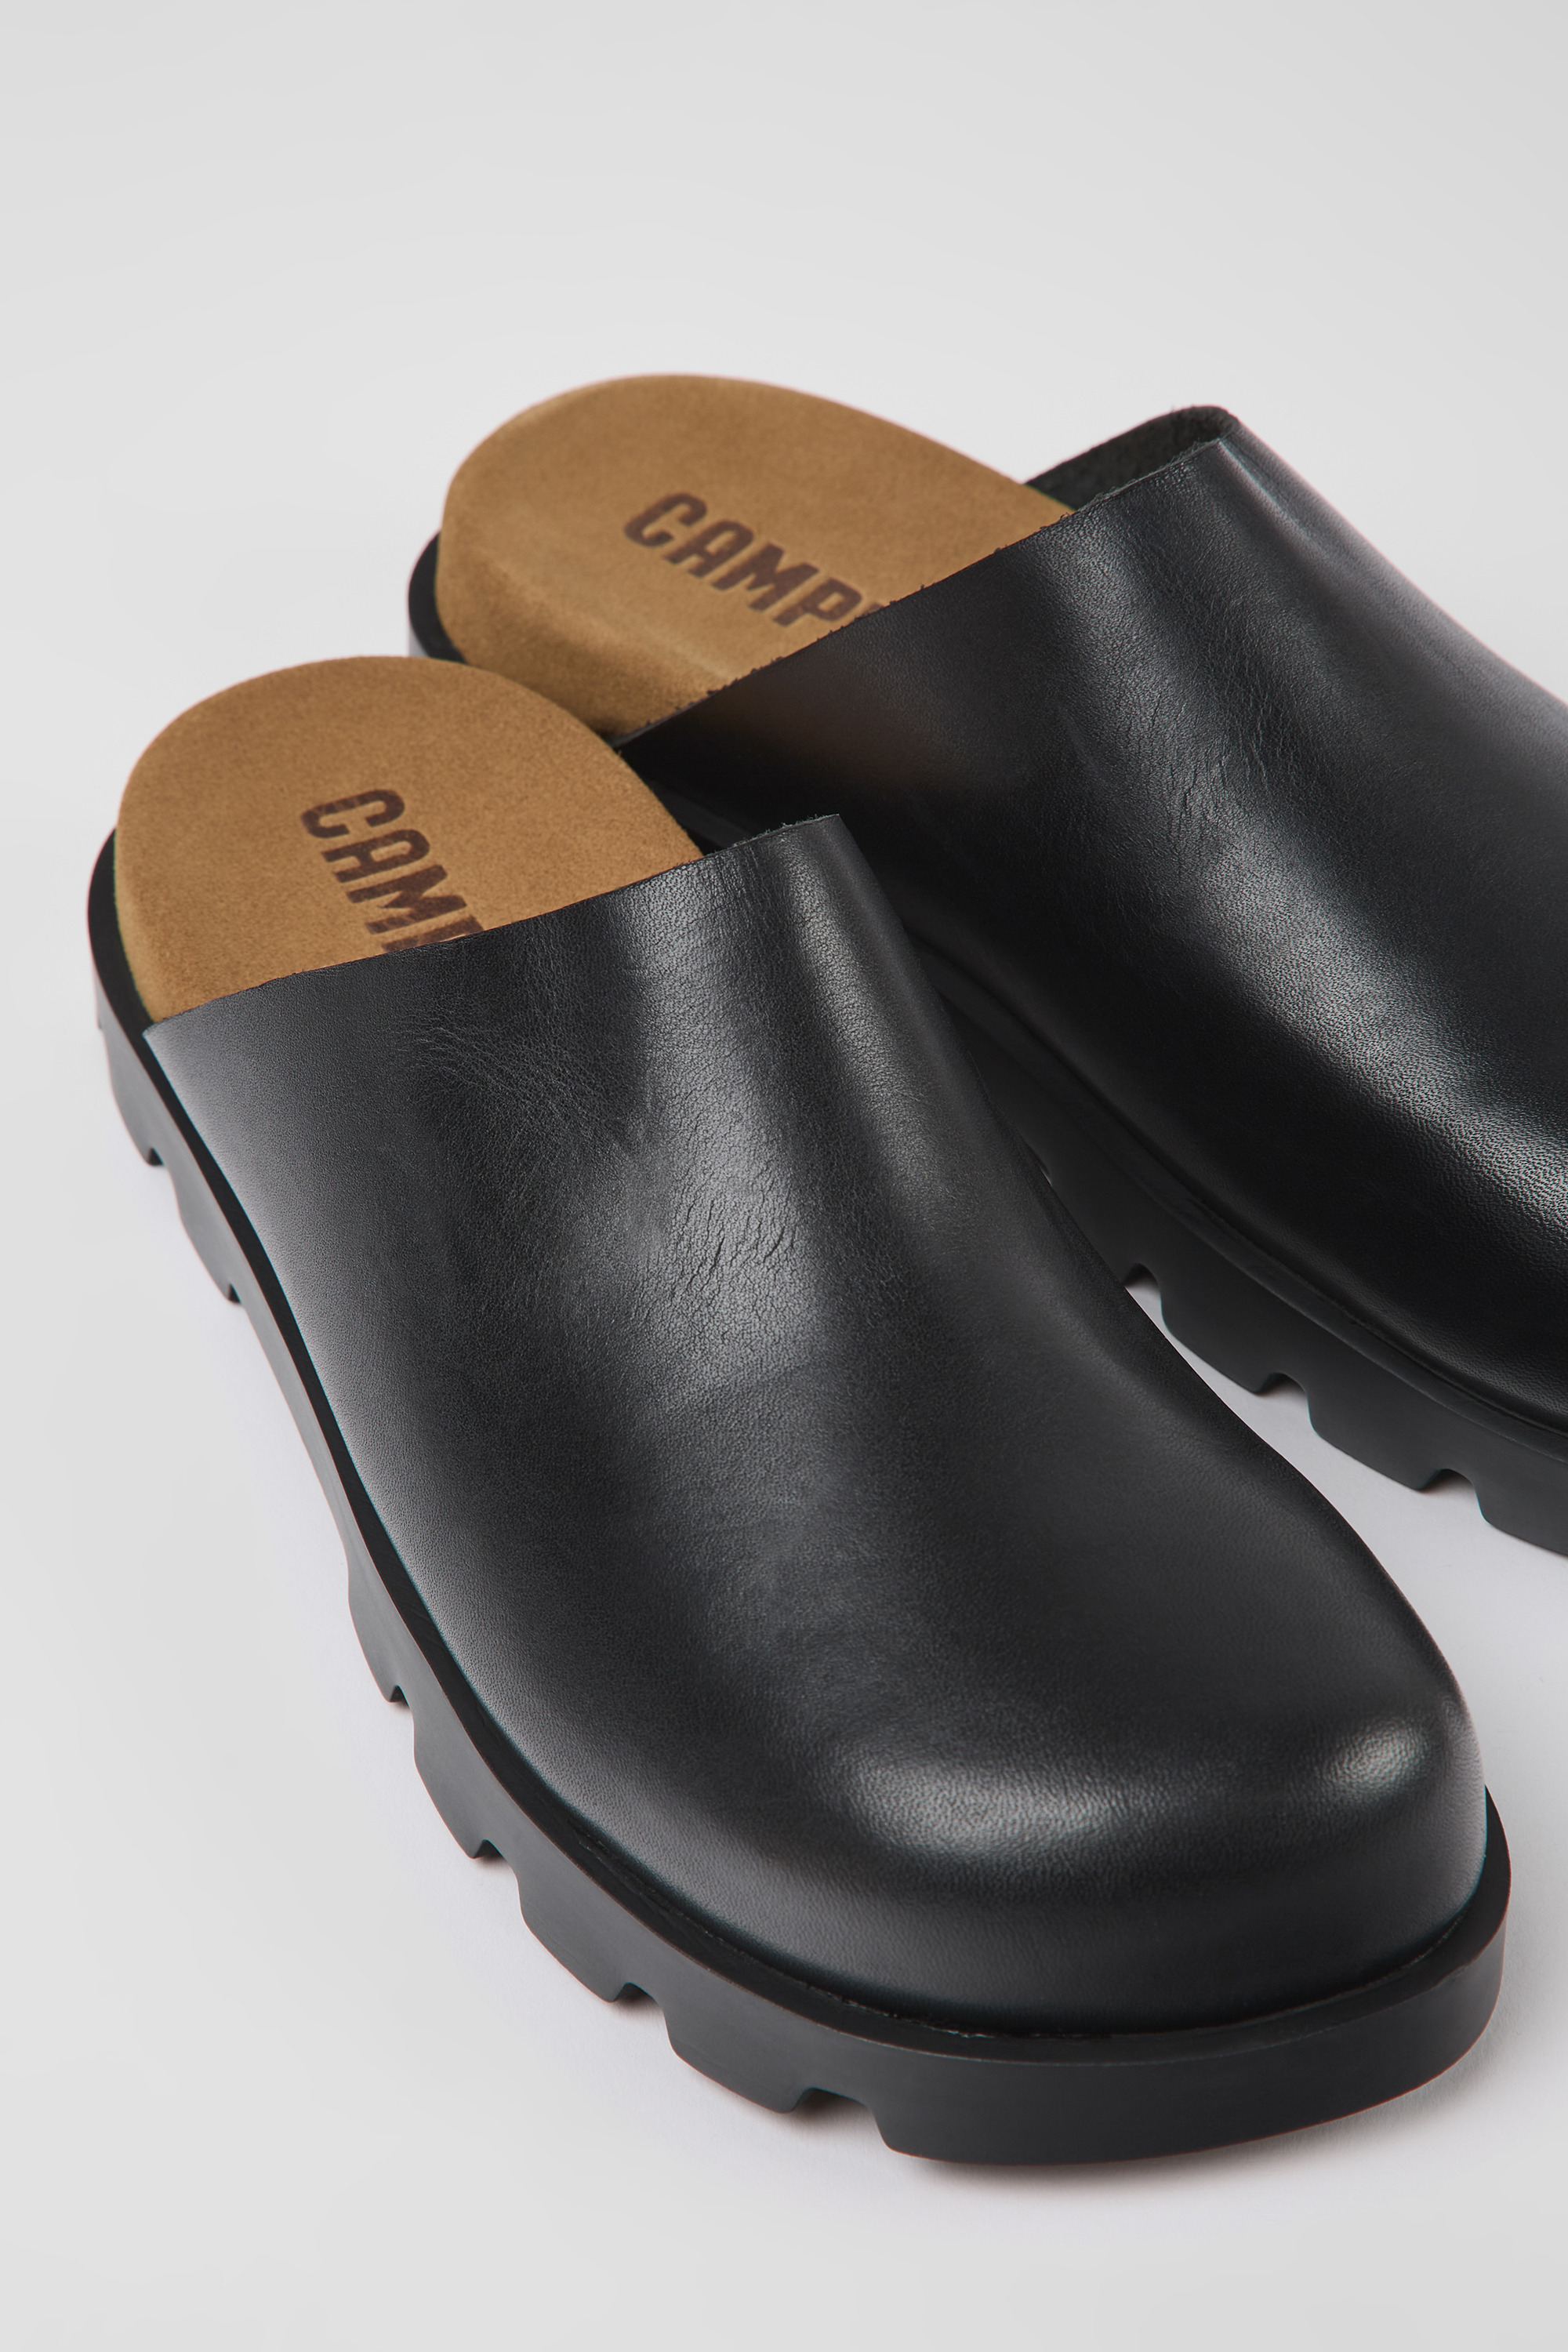 BRUTUS Black Sandals for Men - Autumn/Winter collection - Camper 